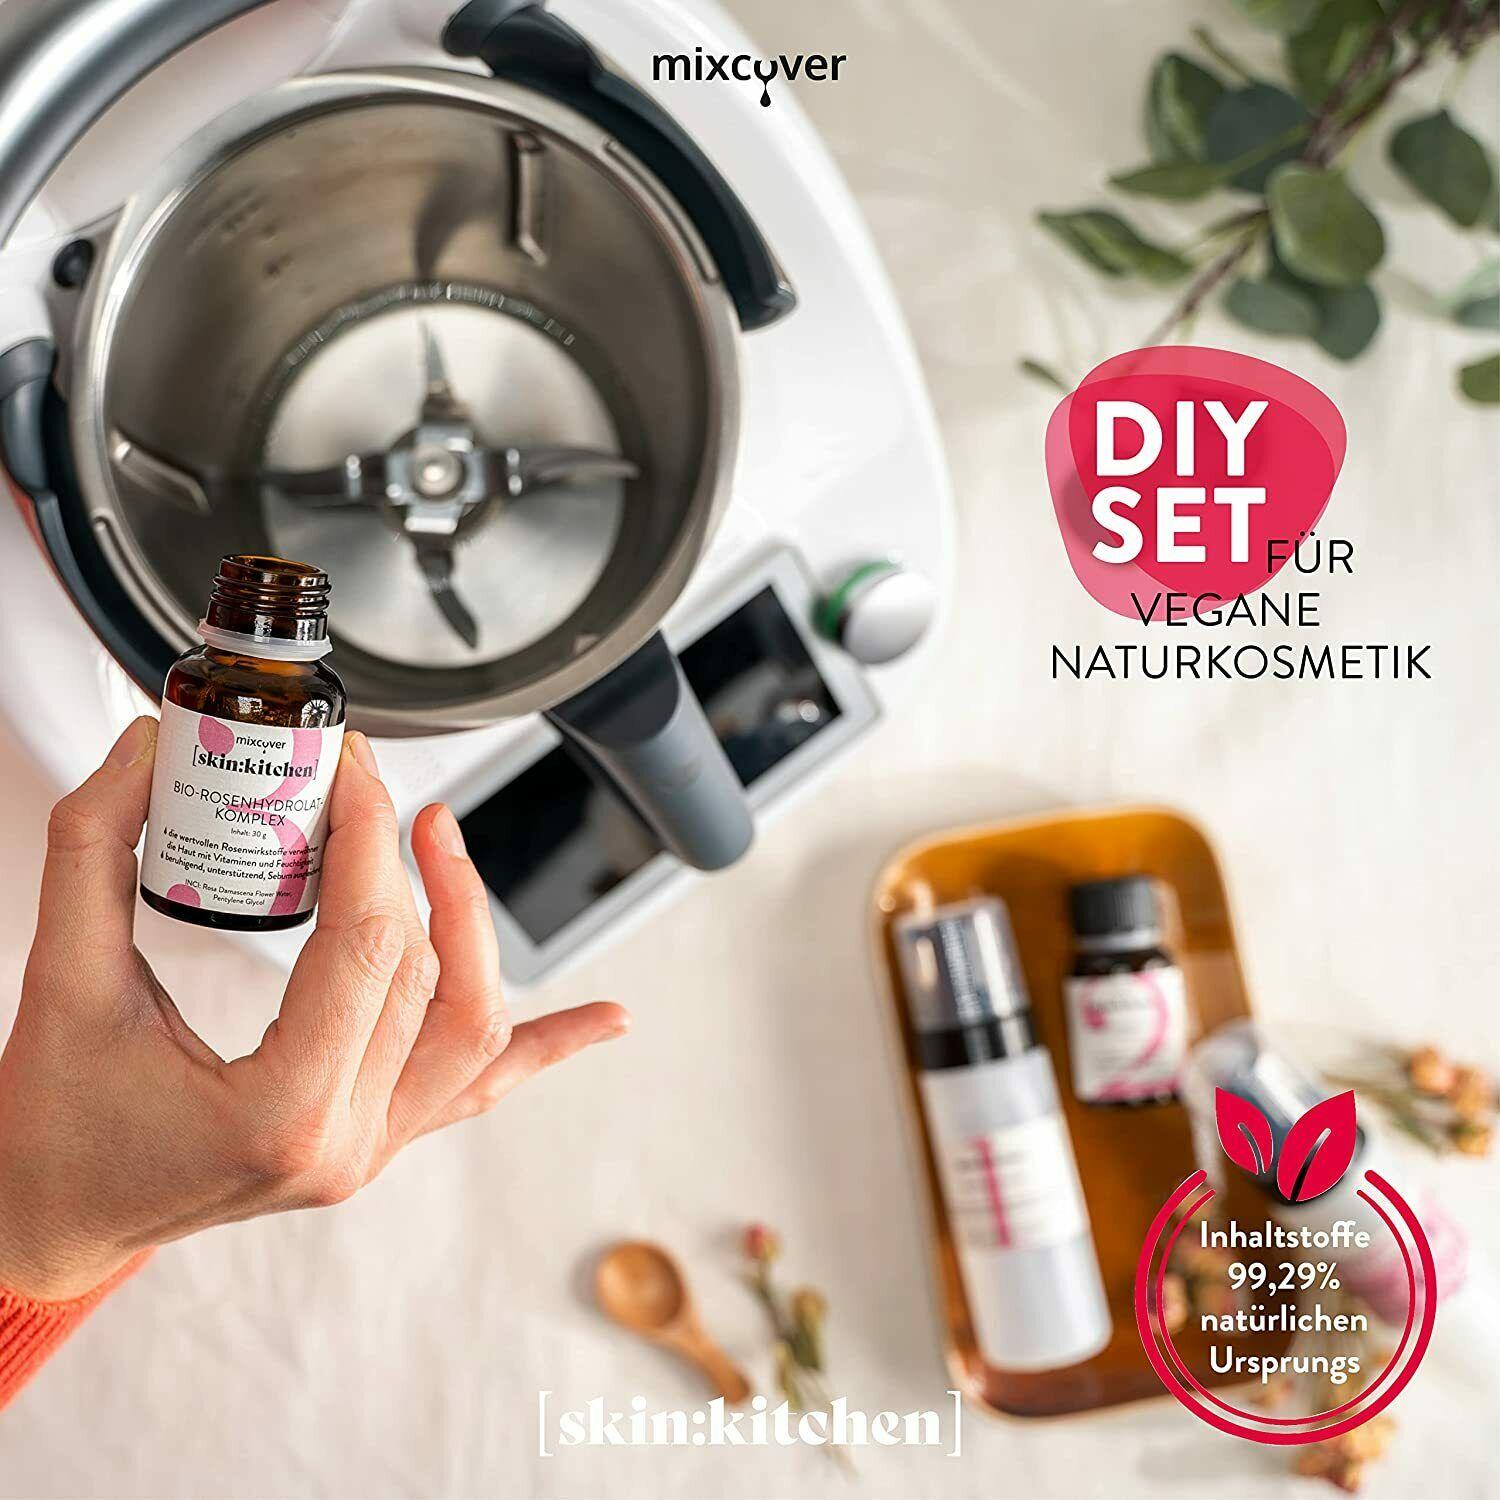 DIY Set Naturkosmetik Reinigungsmousse Rosenhydrolat Tonic für Küchenmaschinen - Mixcover - Mixcover